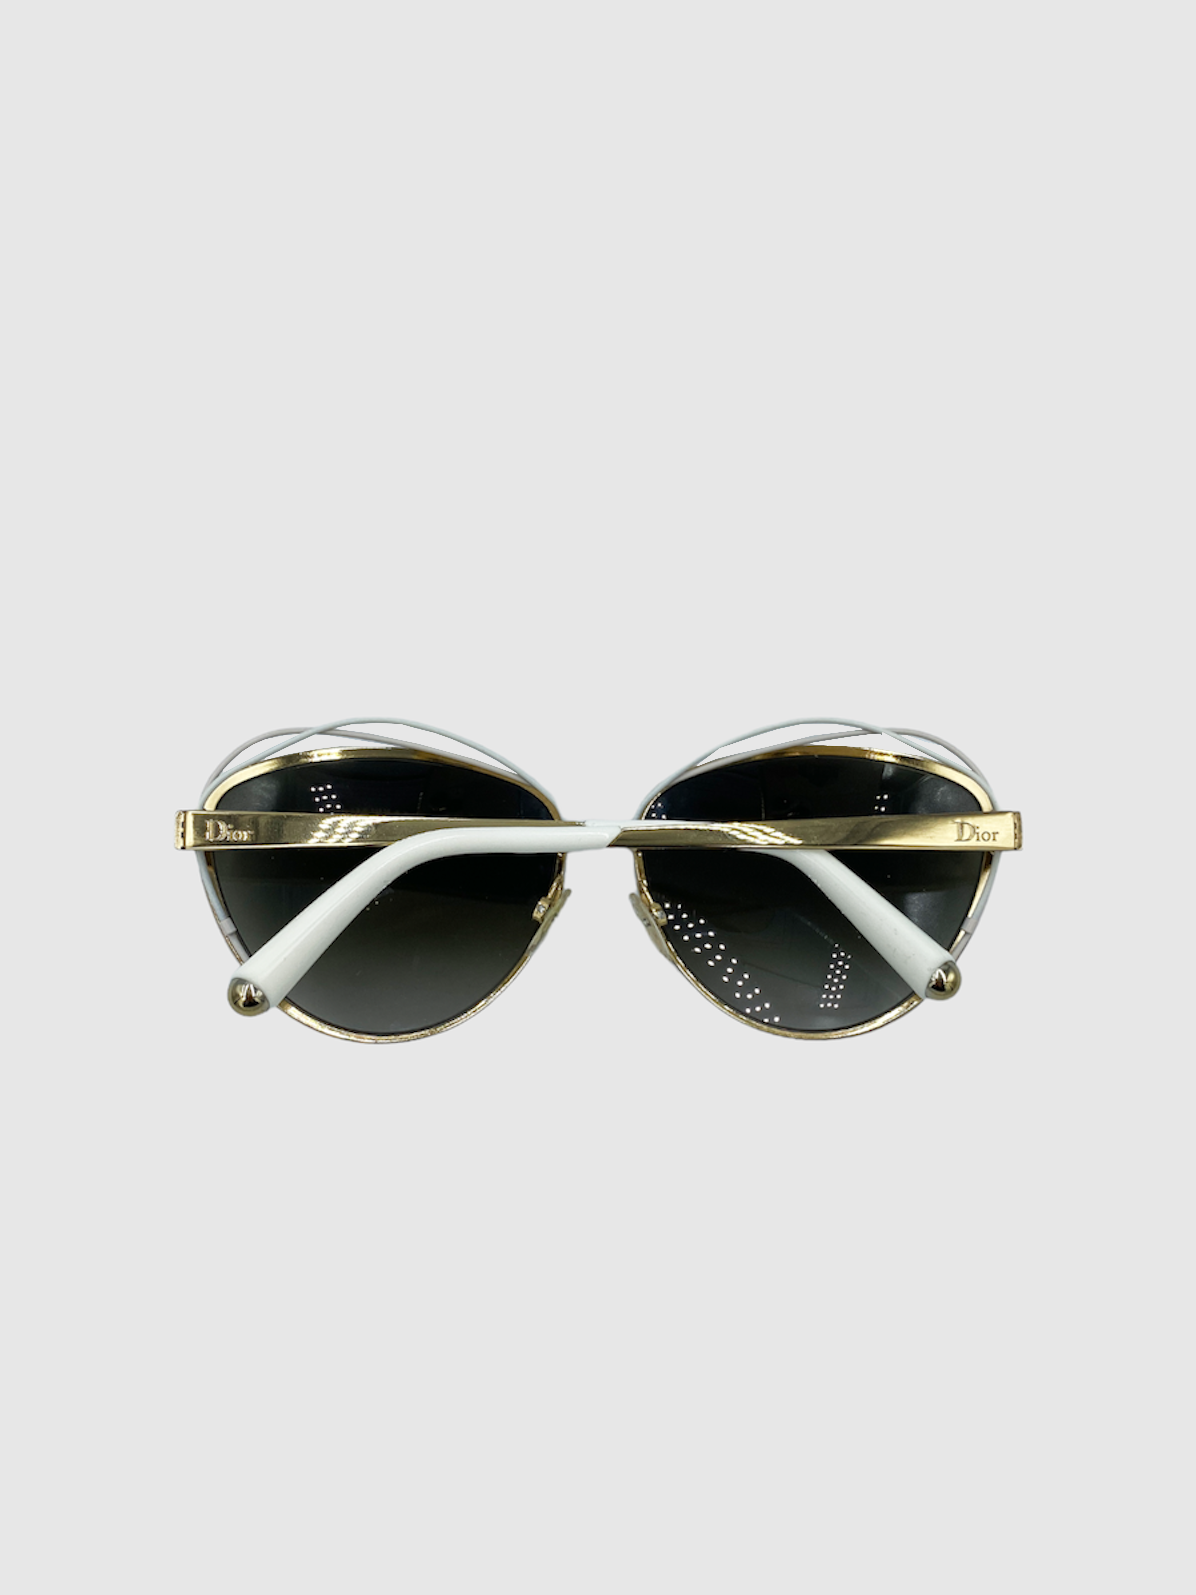 Christian Dior Songe White Sunglasses